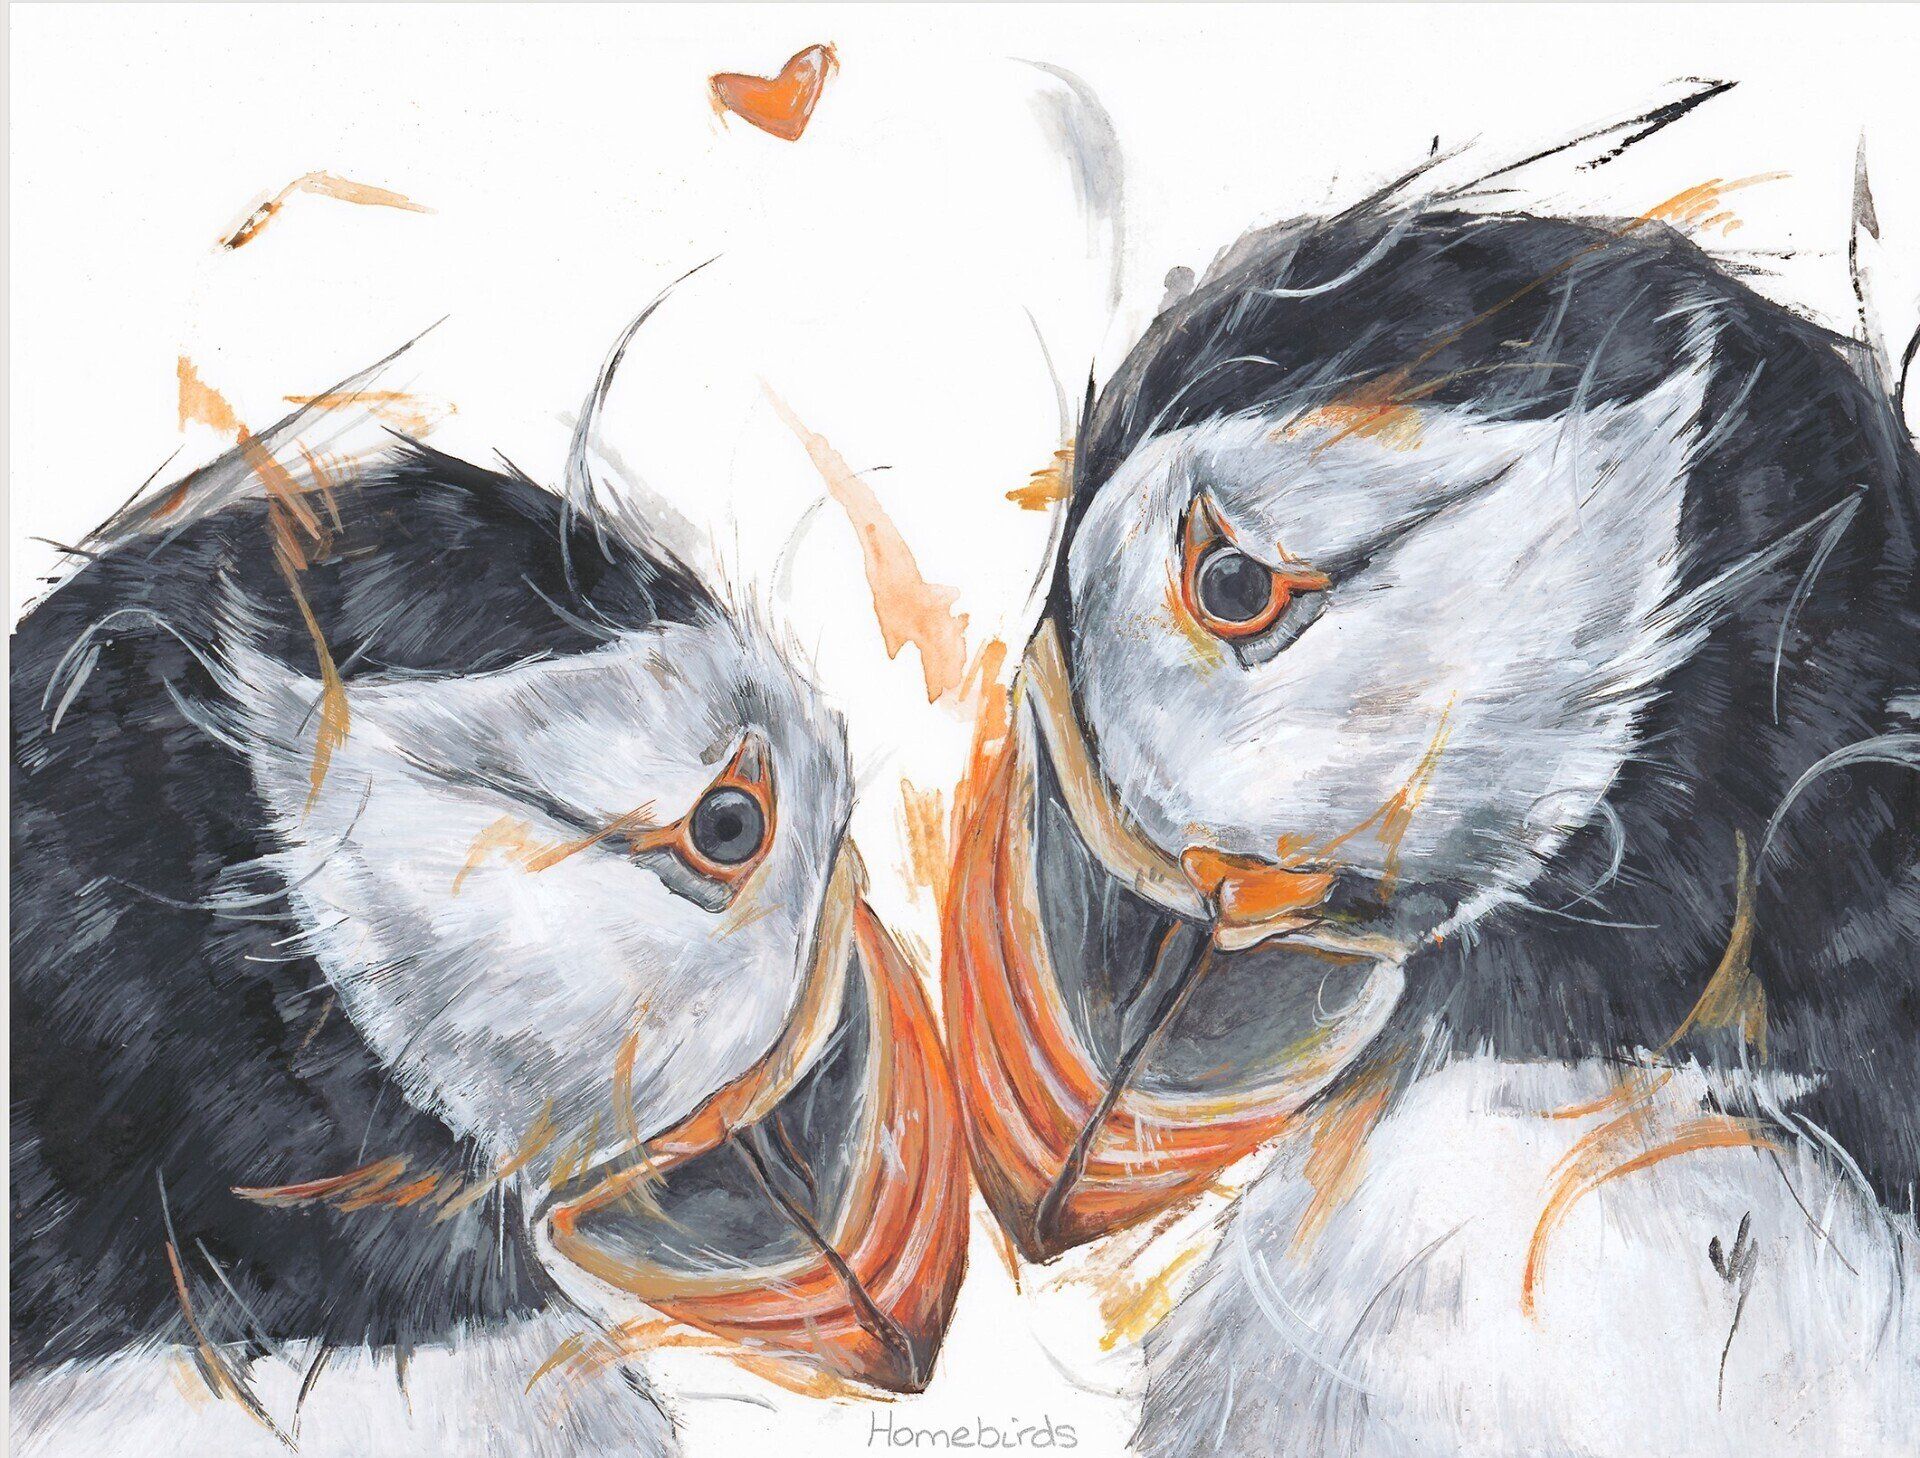 Homebirds - Aaminah Snowdon